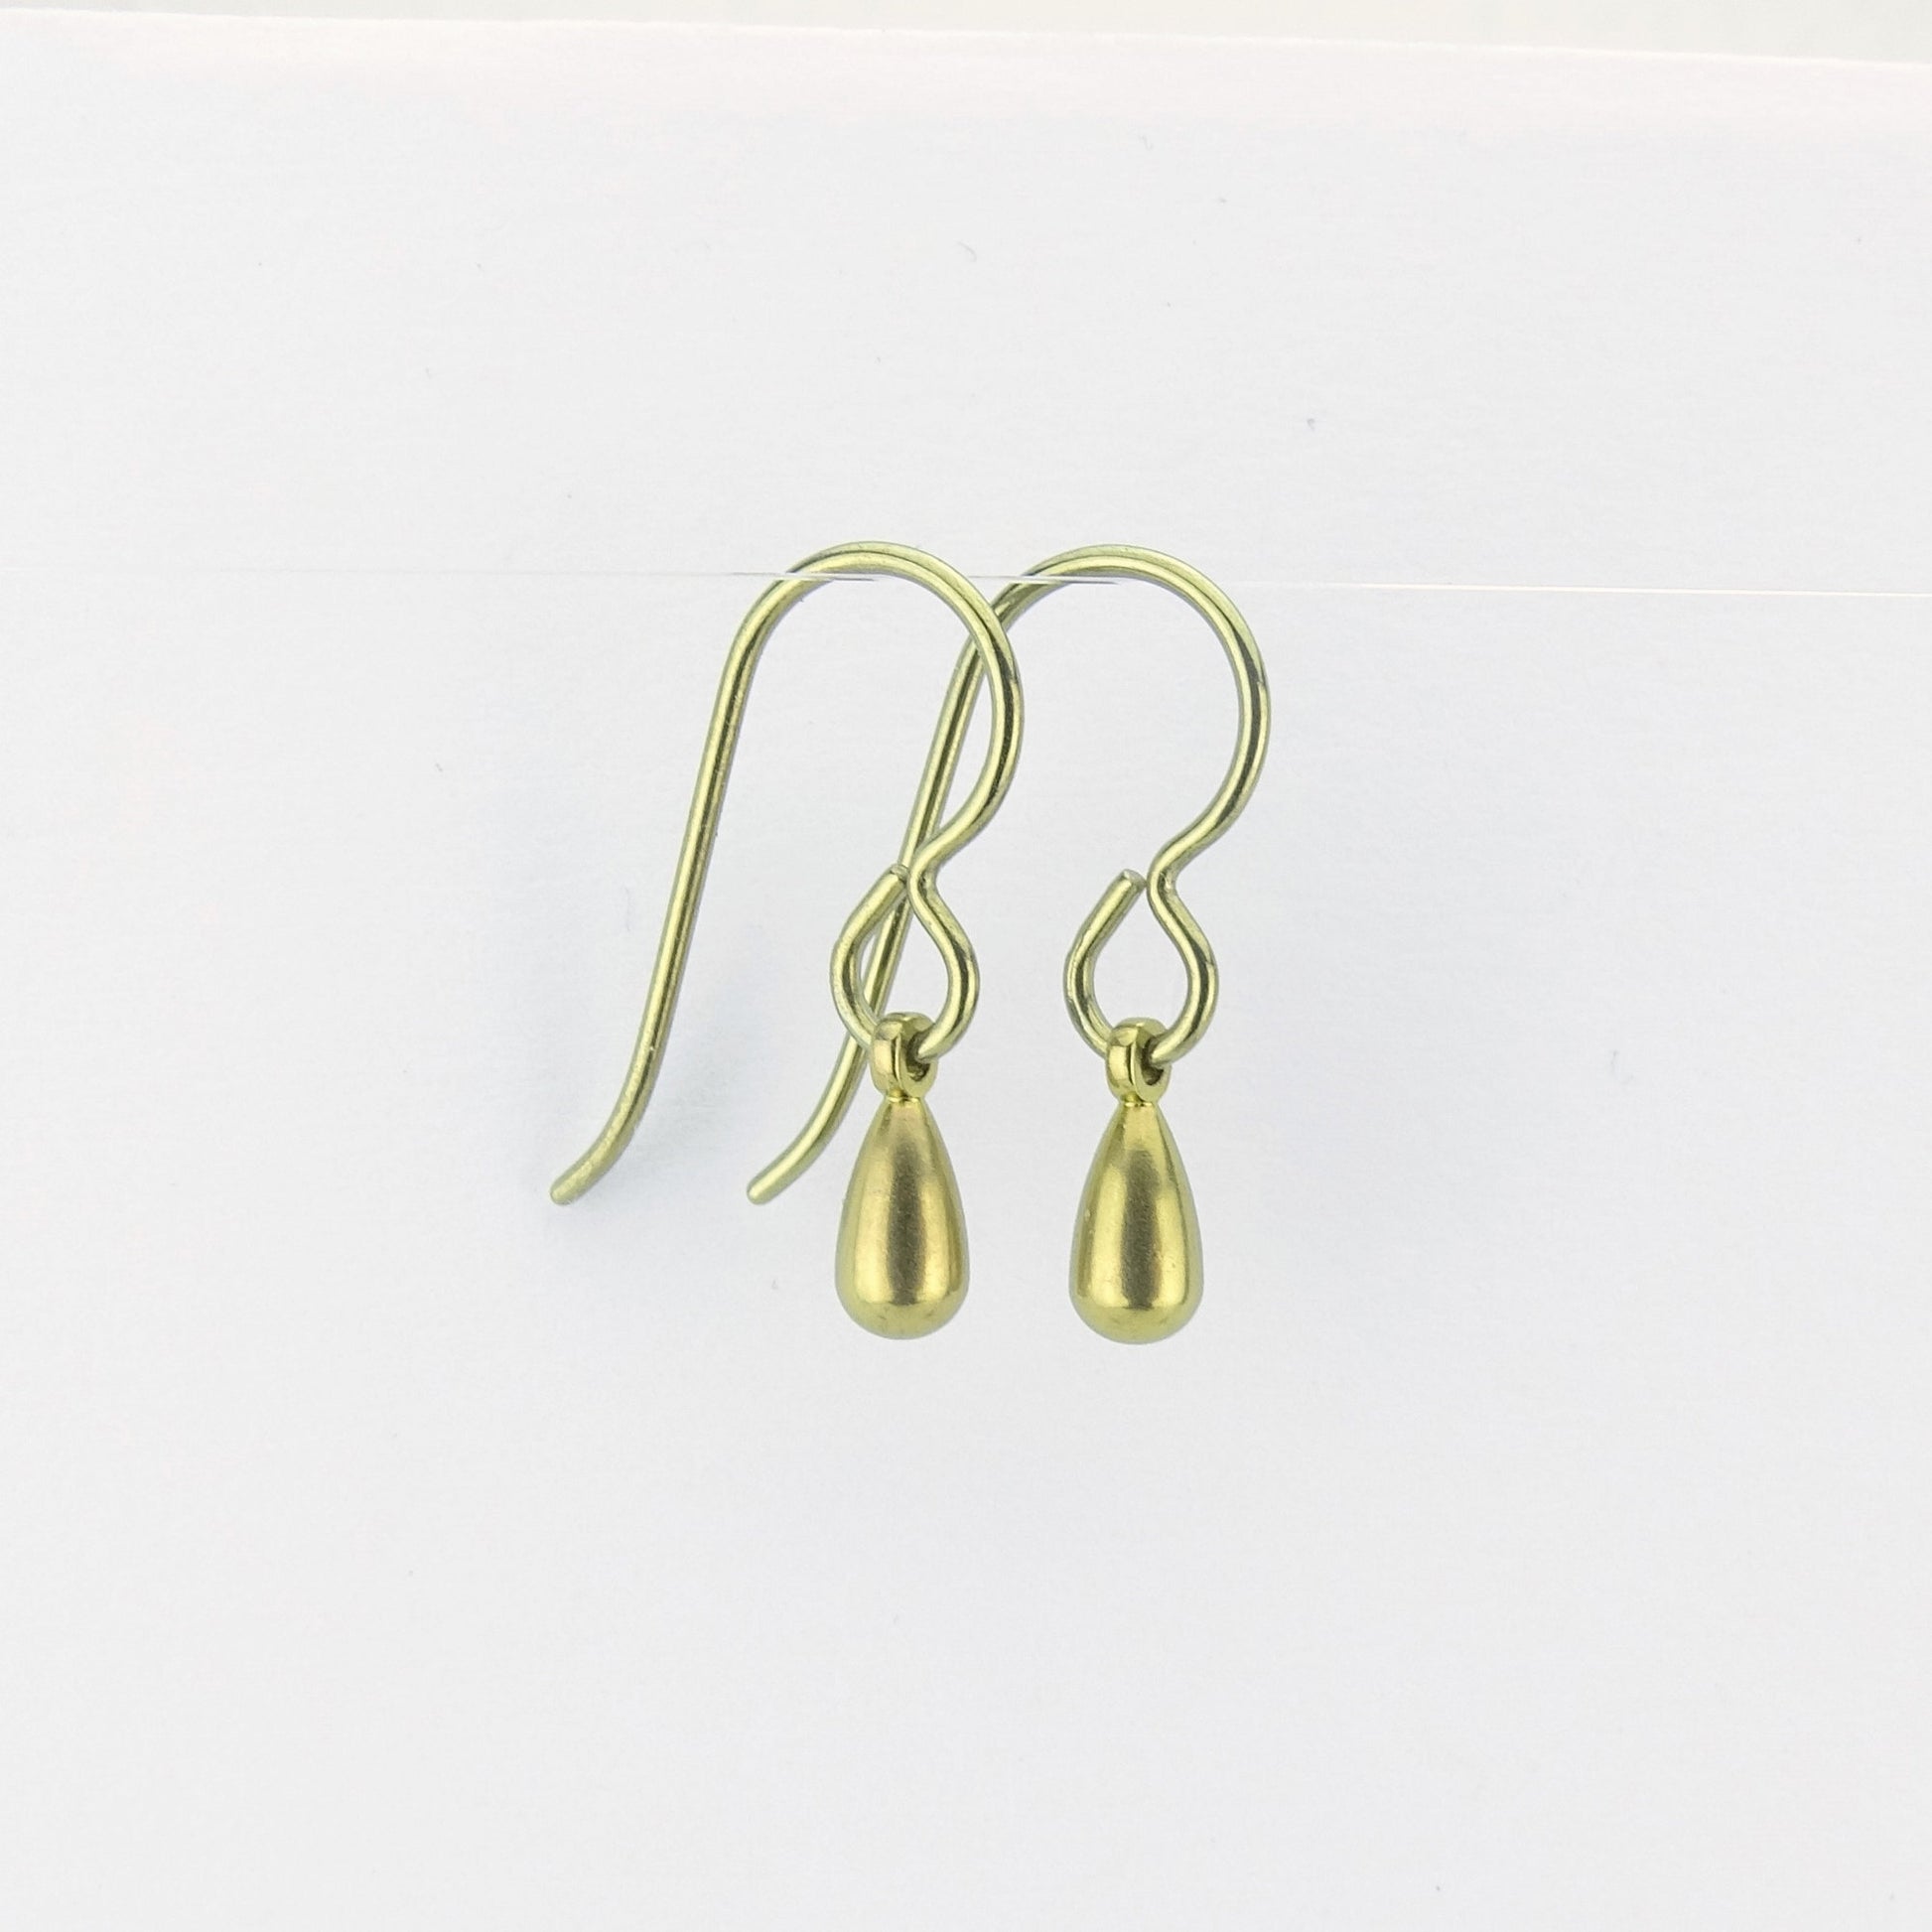 Tiny Gold Titanium Teardrop Earrings, Nickel Free Drop Earrings for Sensitive Ears, Hypoallergenic Titanium Jewellery